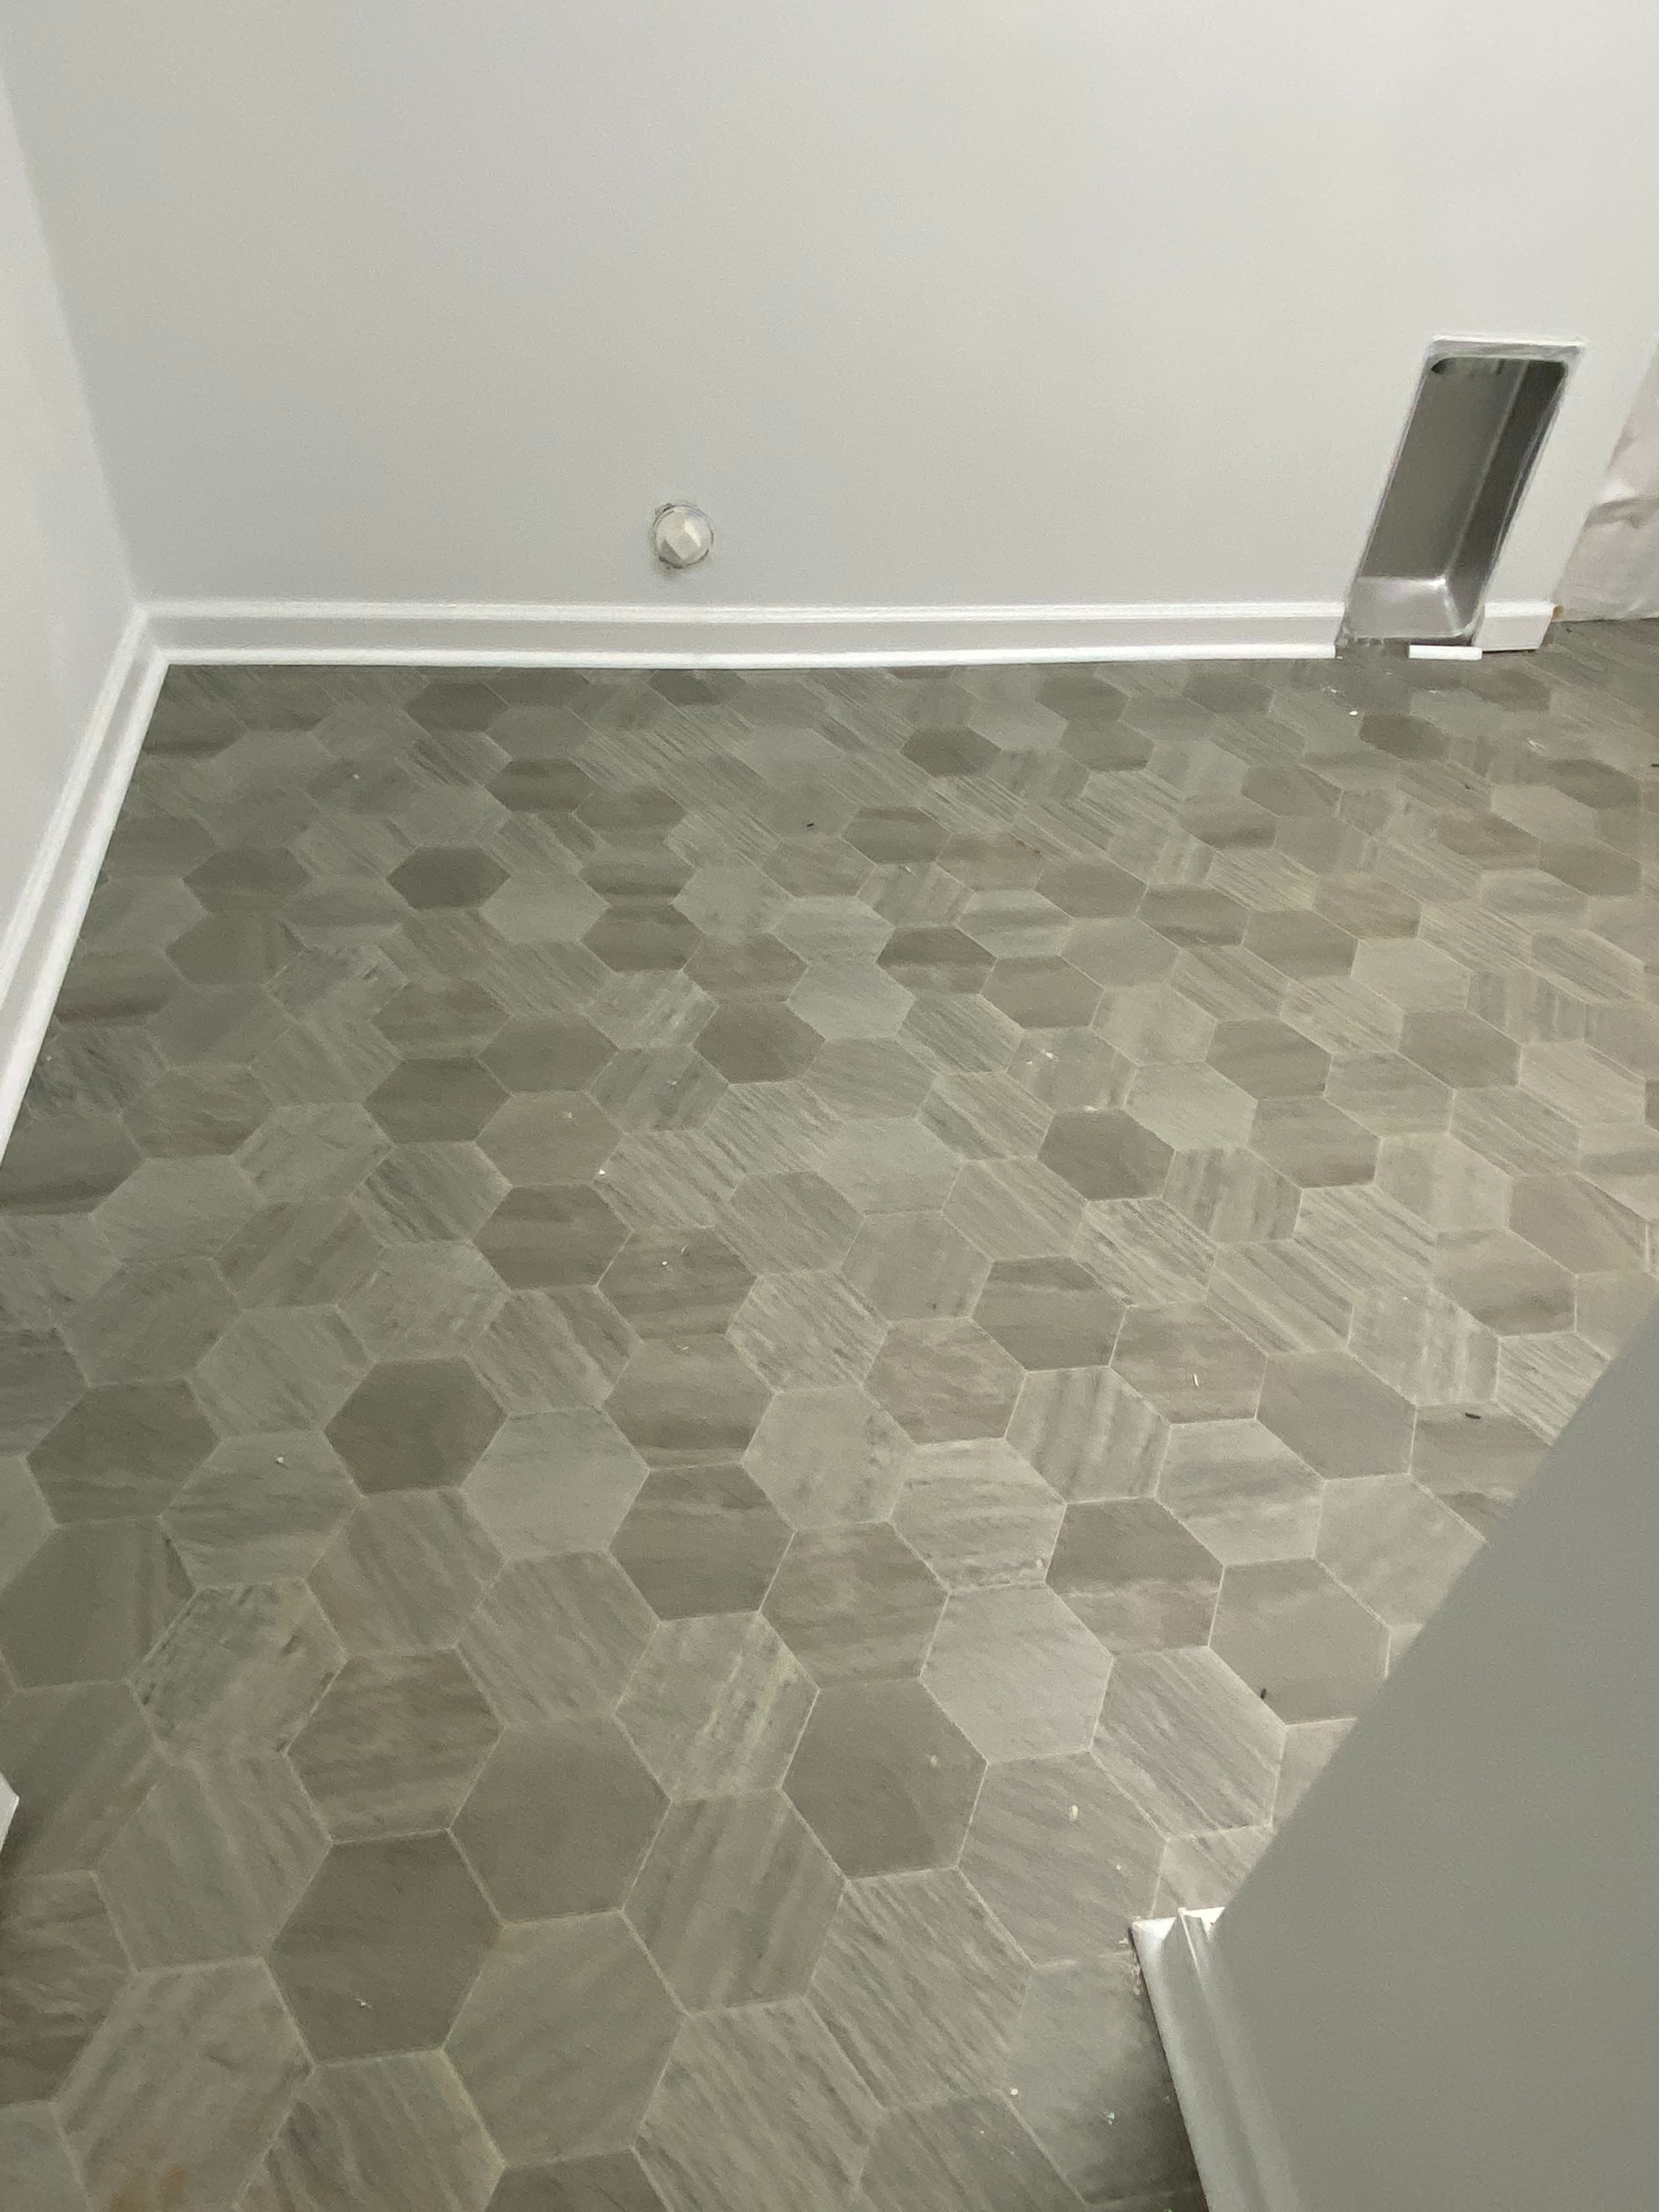 Tile flooring | Carpetland USA of Virginia